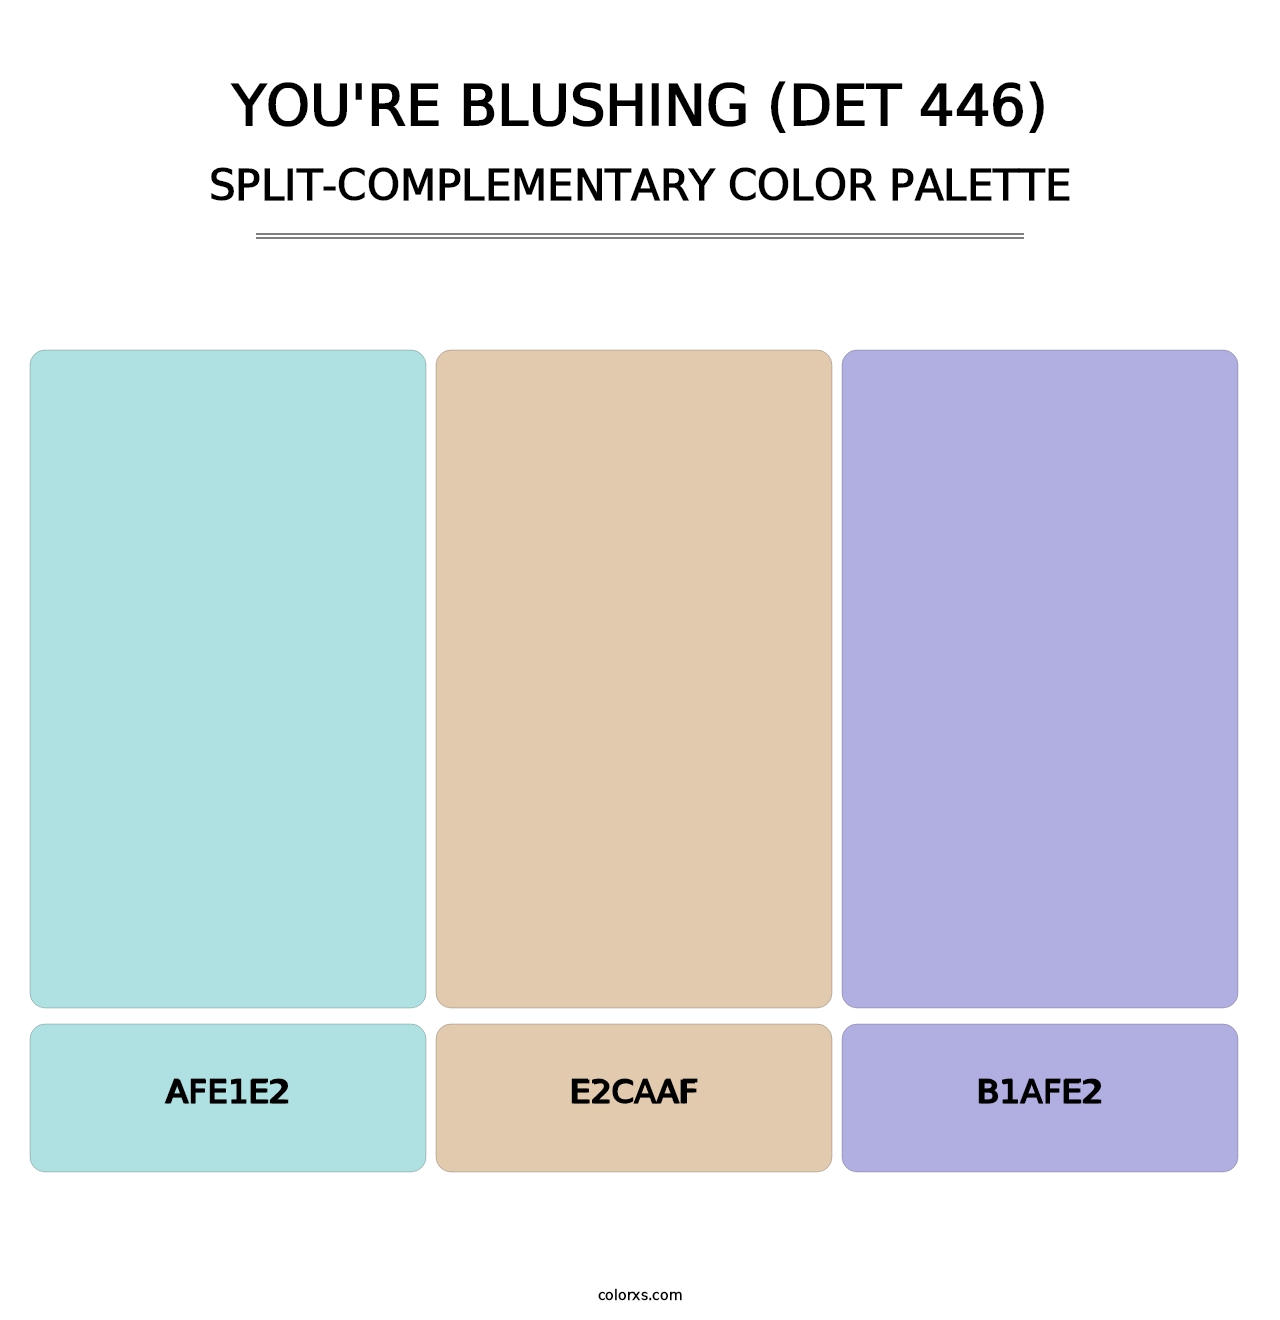 You're Blushing (DET 446) - Split-Complementary Color Palette